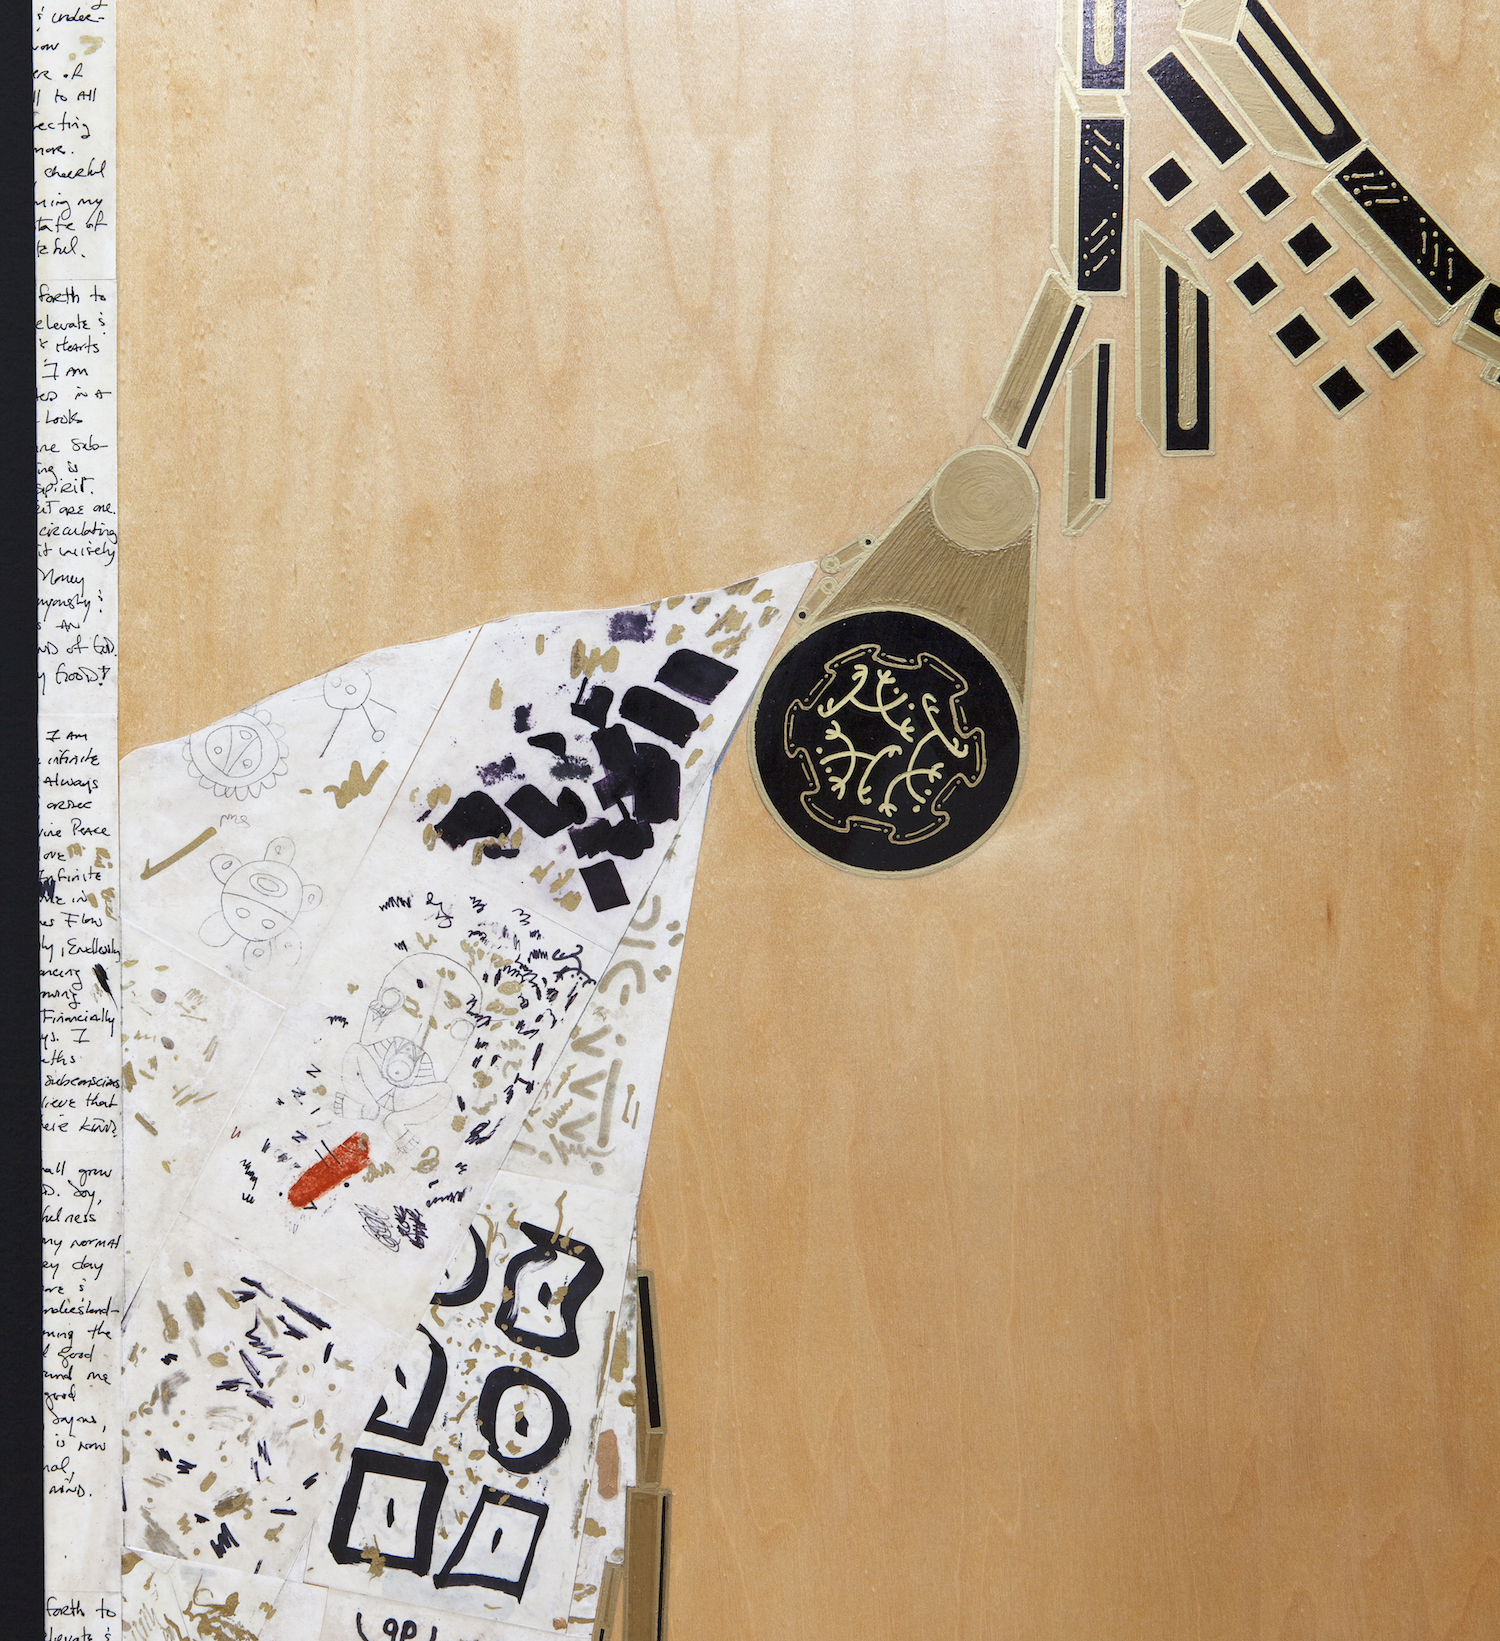 Glendalys Medina, *Mx. Nuyorican*, 2019, detail view. Paper, marker, nails, and thread, 8 x 4 feet